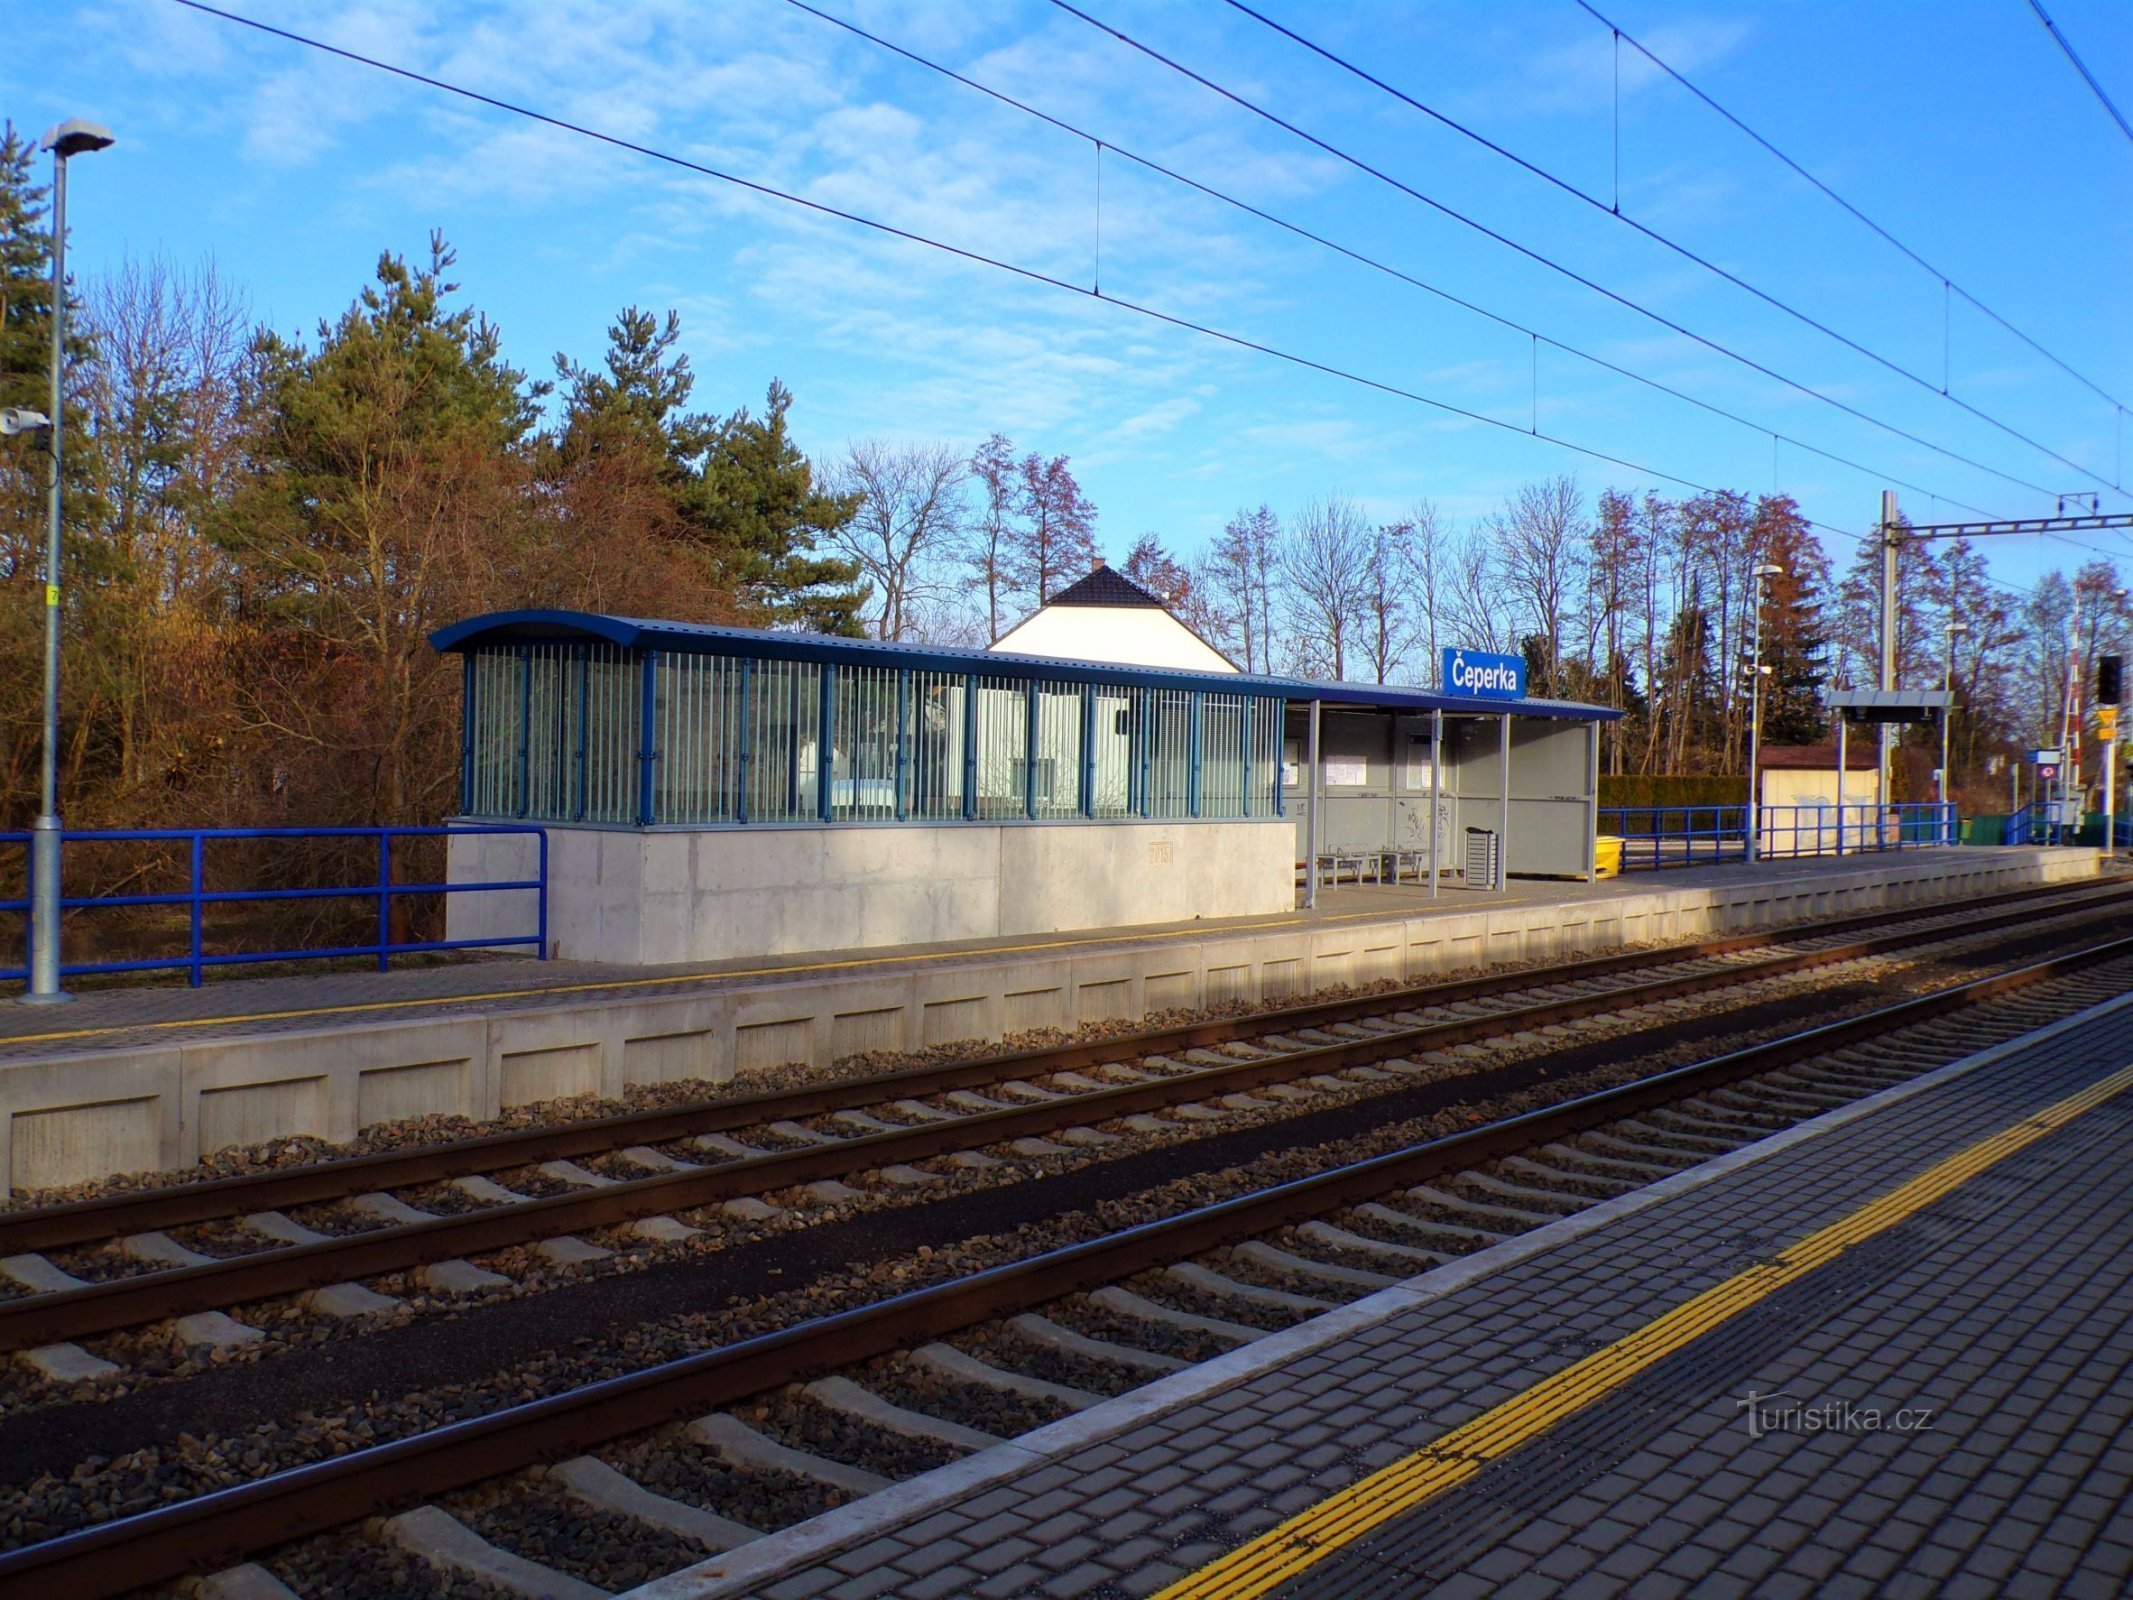 Železniška postaja (Čeperka, 18.2.2022. XNUMX. XNUMX)